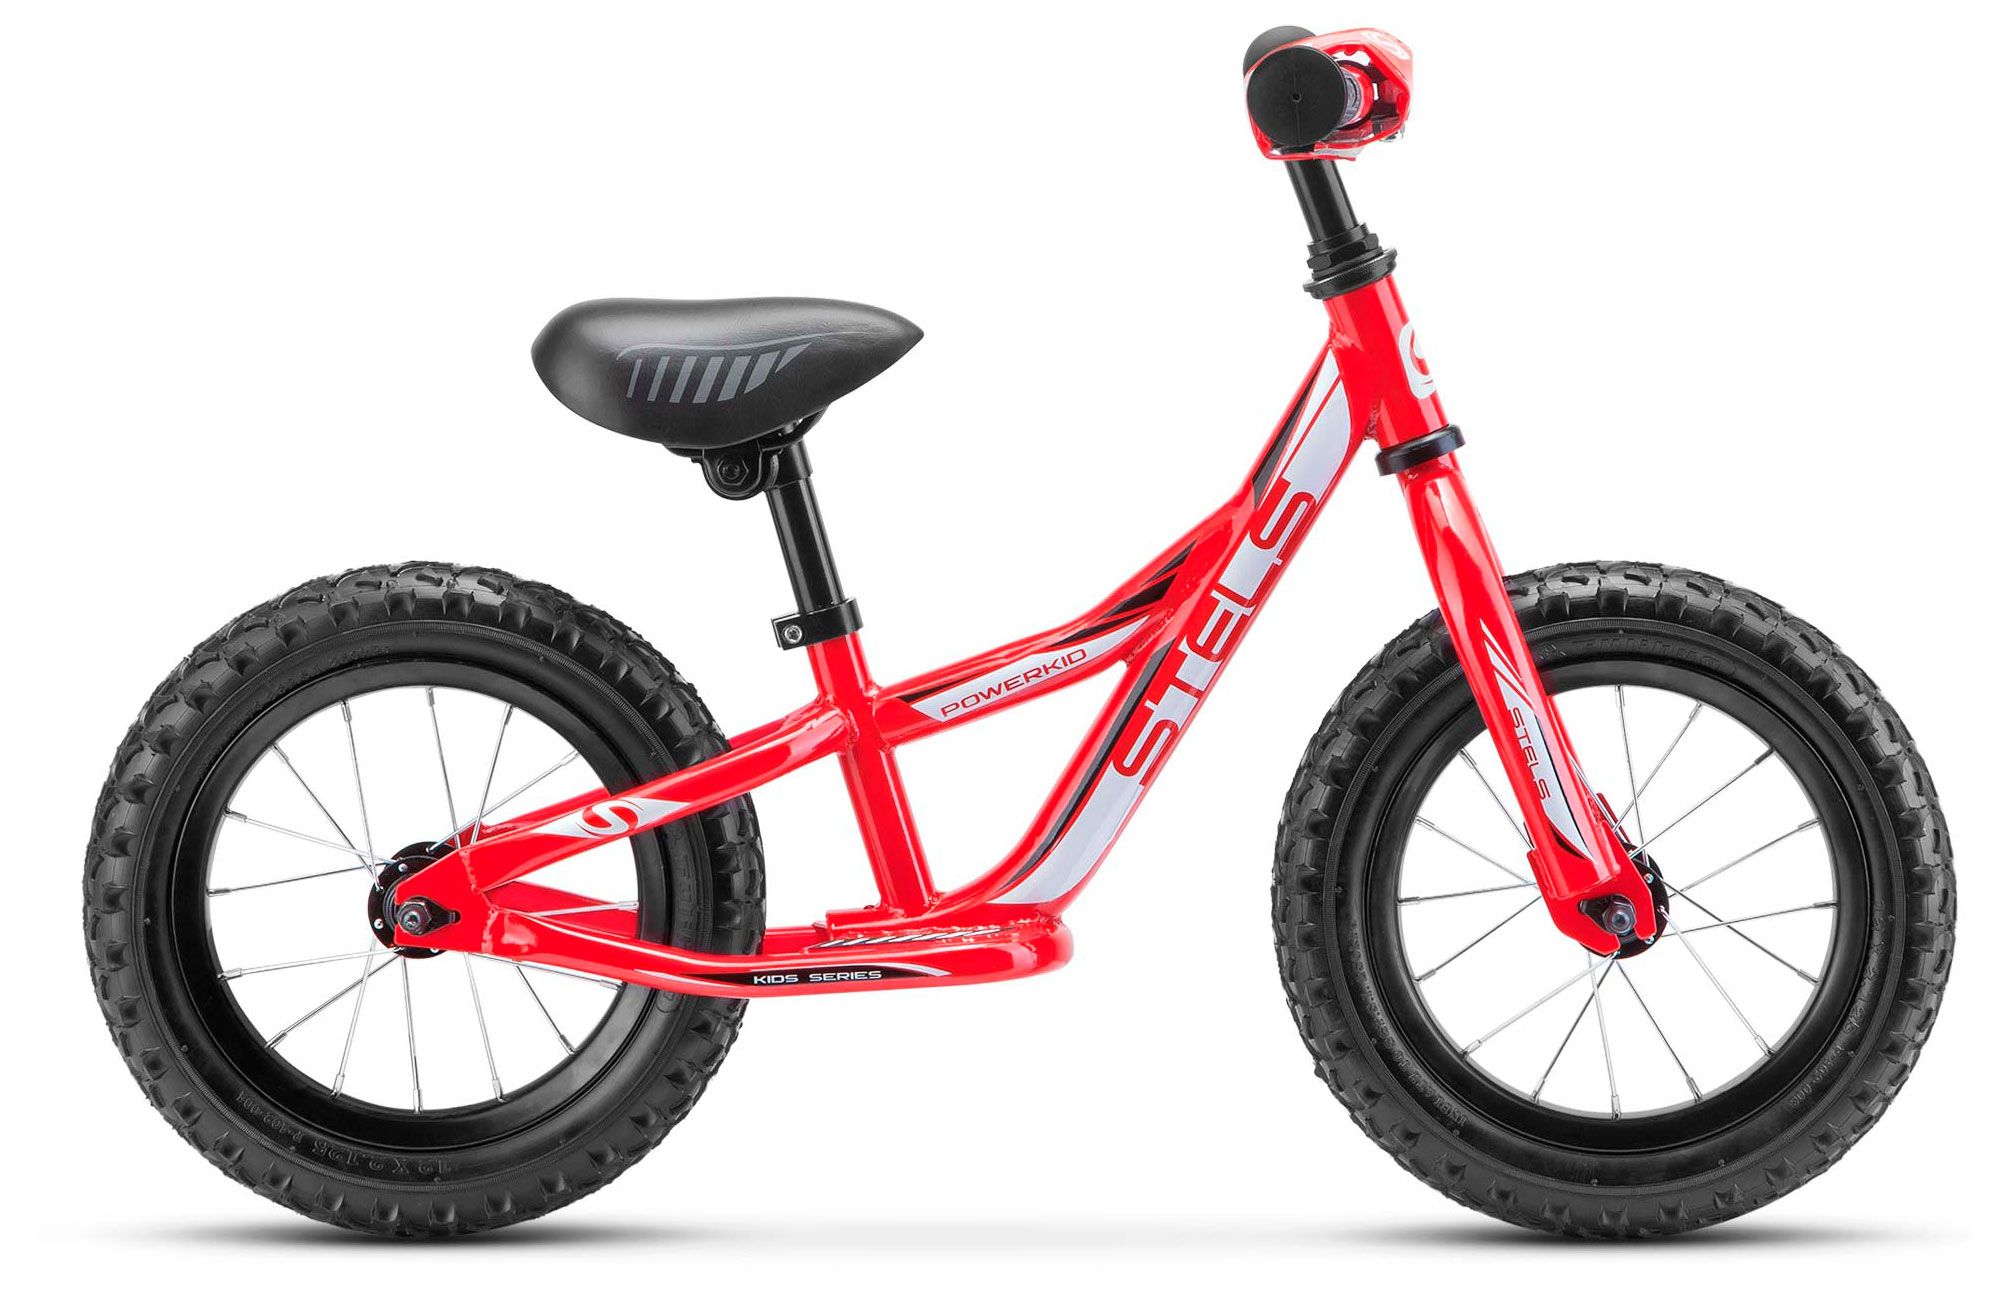  Велосипед Stels Powerkid 12 (Boy) V020 2018